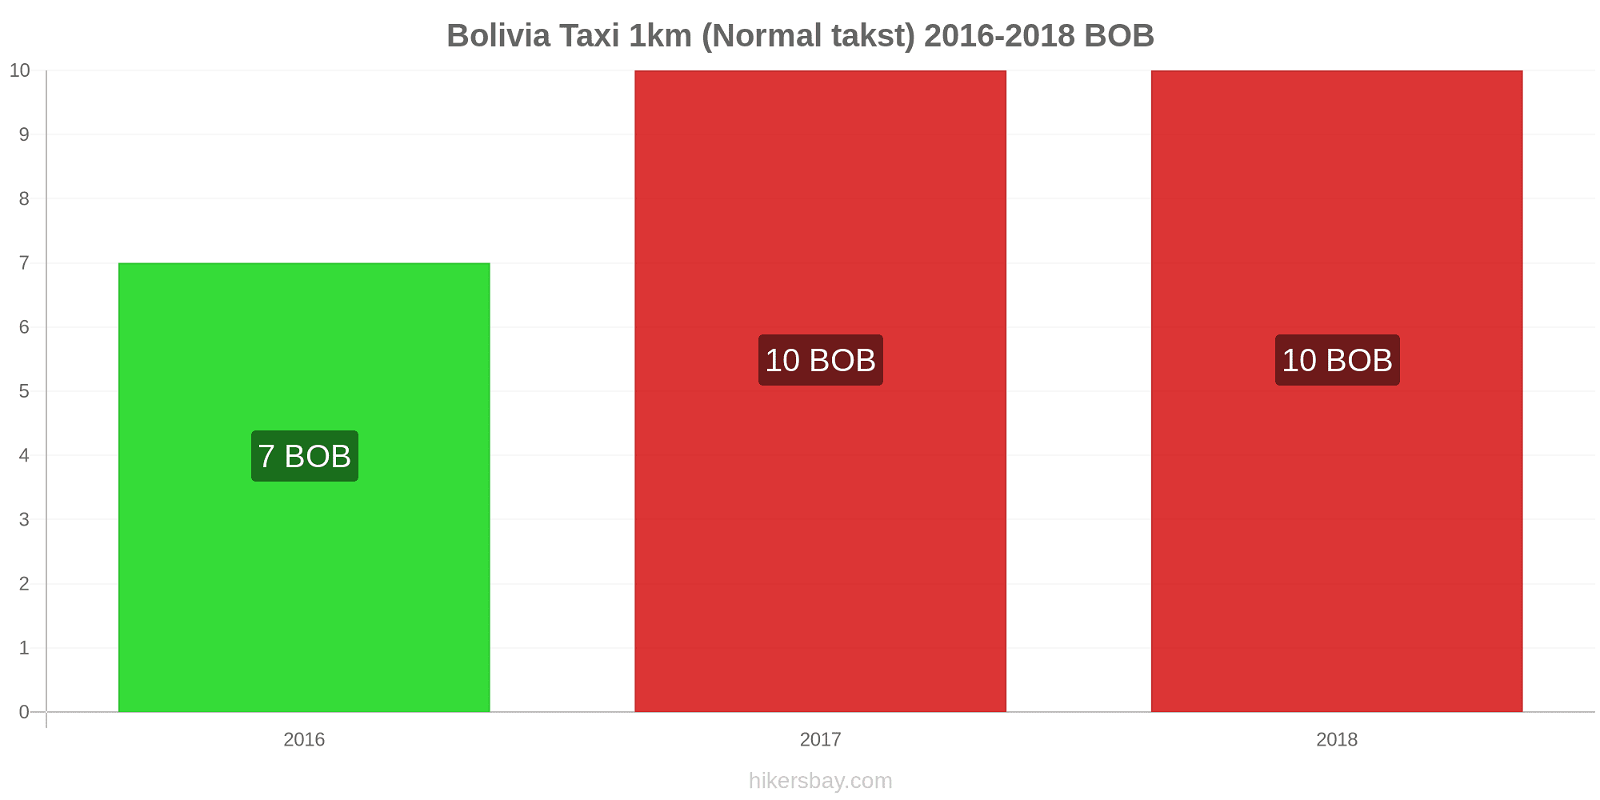 Bolivia prisændringer Taxi 1km (normal takst) hikersbay.com